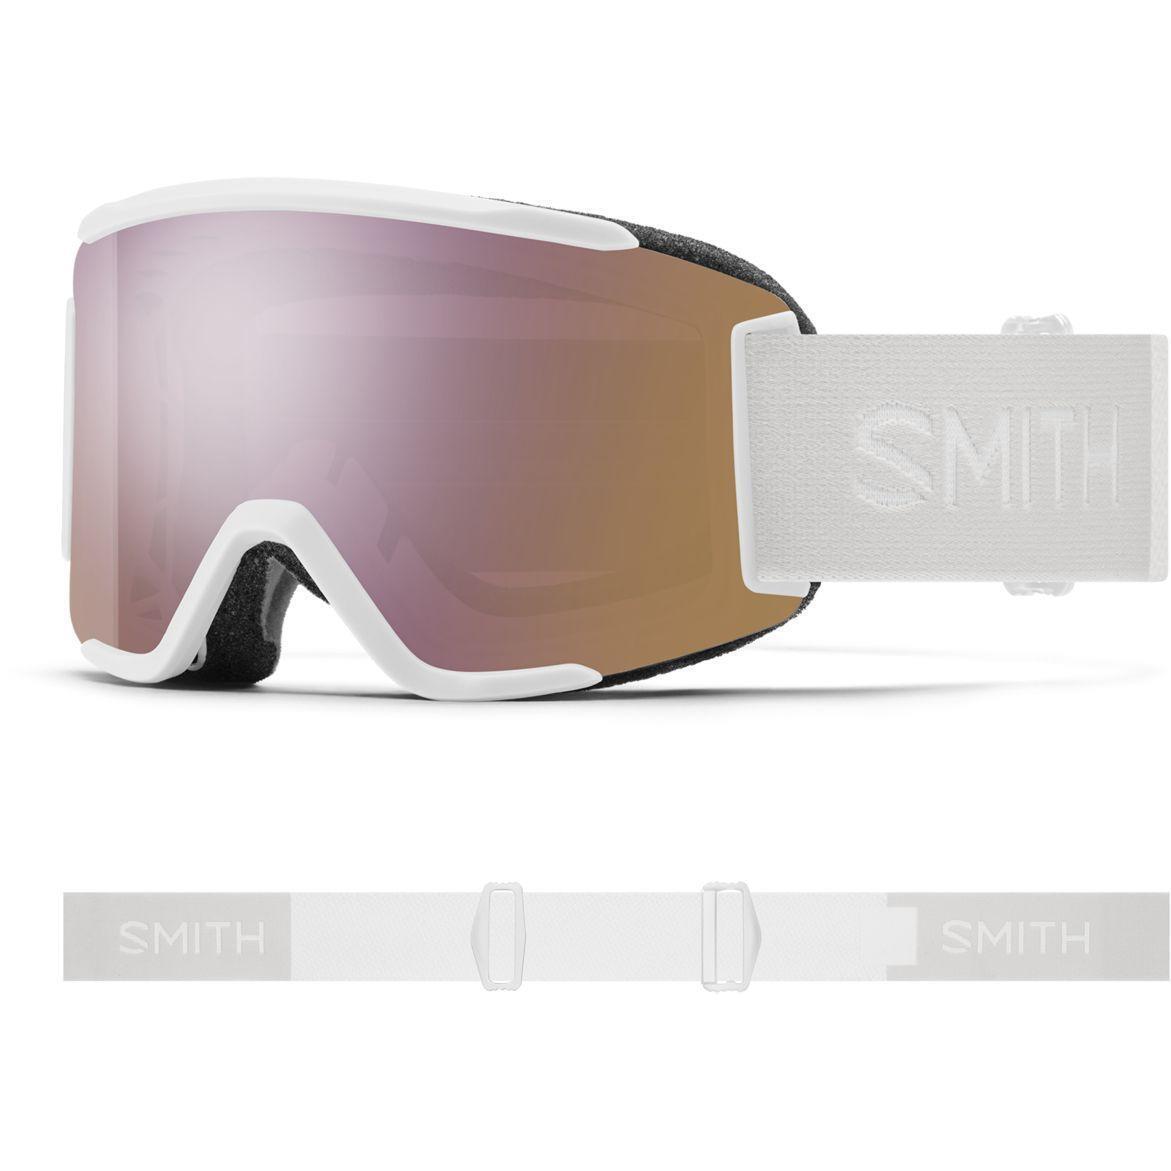 Smith Squad S Goggles White Vapor - Chromapop Everyday Rose Gold Mirror